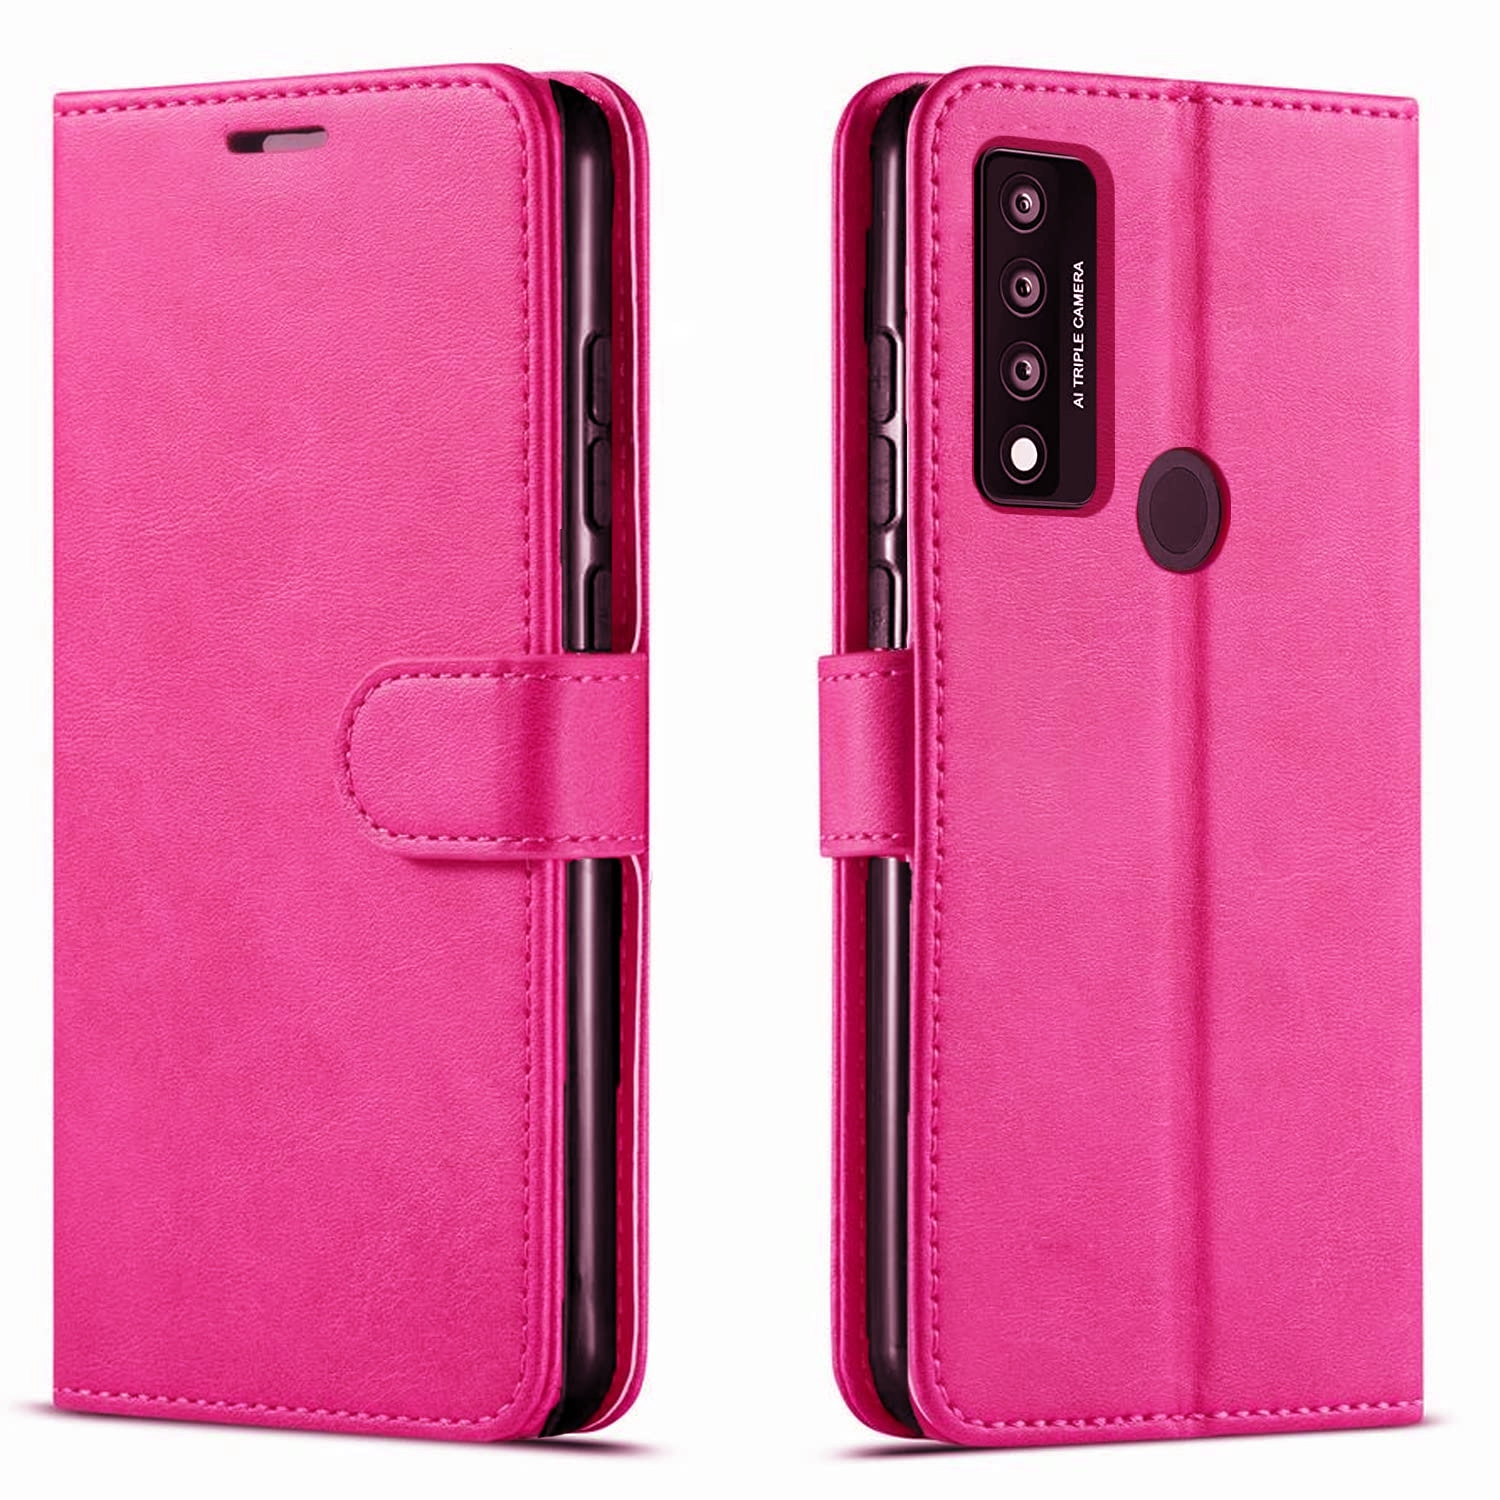 [CS] TCL 20S / 20L / 20L Plus Case, Magnetic Leather Folio Wallet Flip Case Cover with Card Slot, Hot Pink